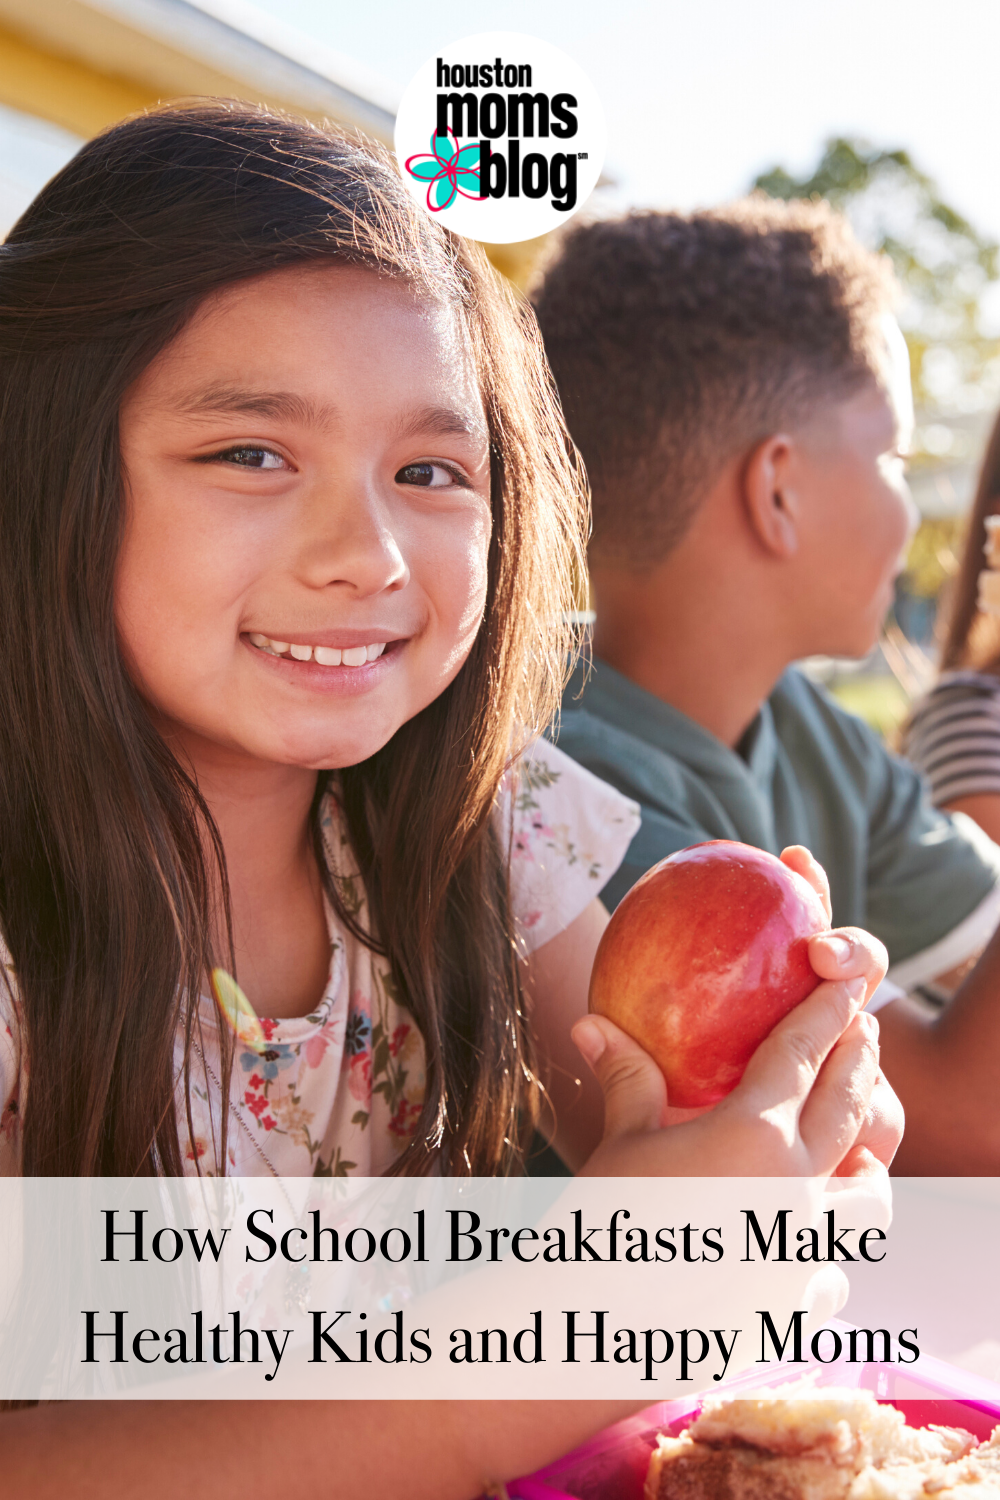 Houston Moms Blog "How School Breakfasts Make Healthy Kids and Happy Moms" #houstonmomsblog #momsaroundhouston